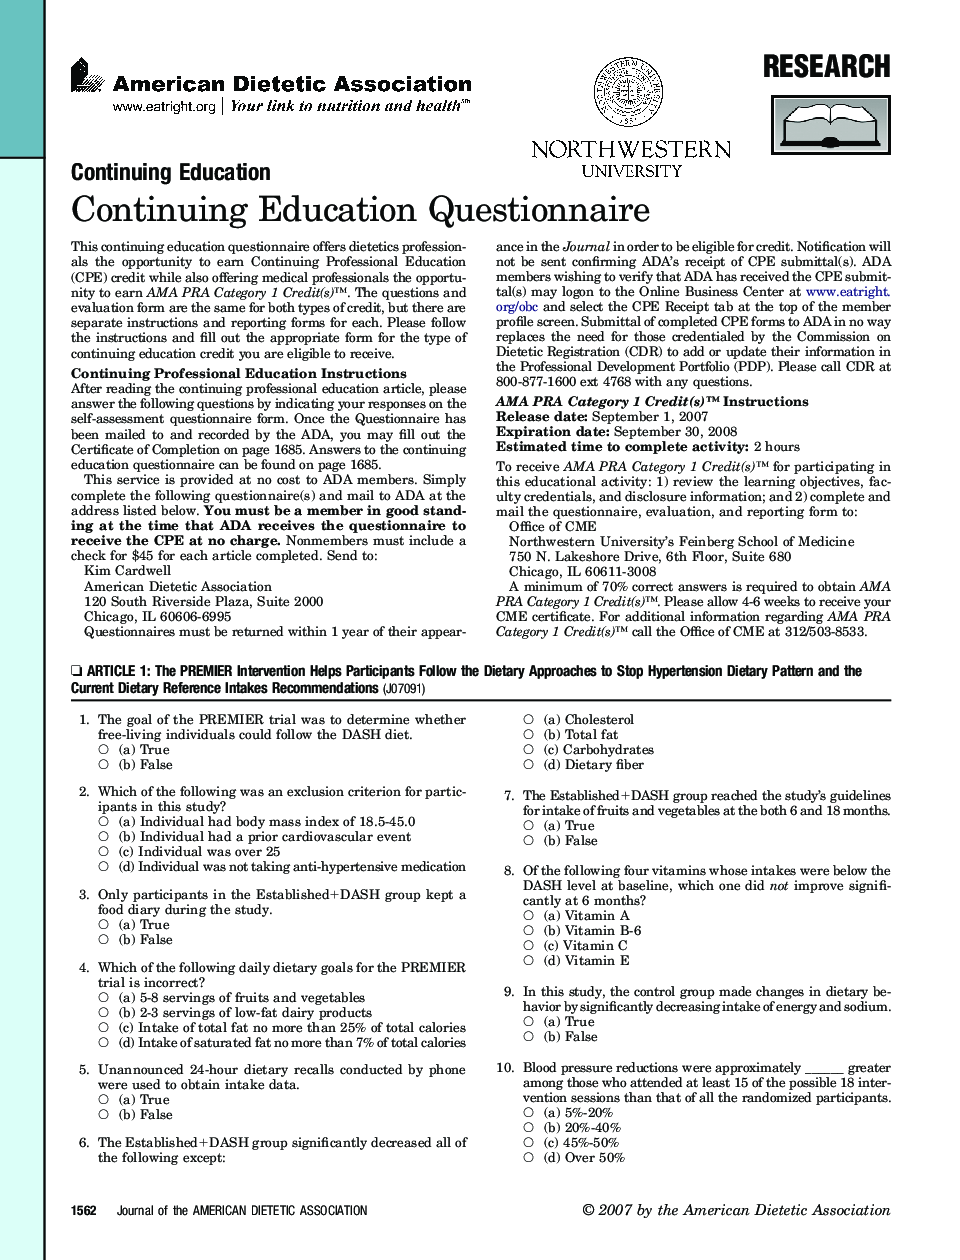 Continuing Education Questionnaire